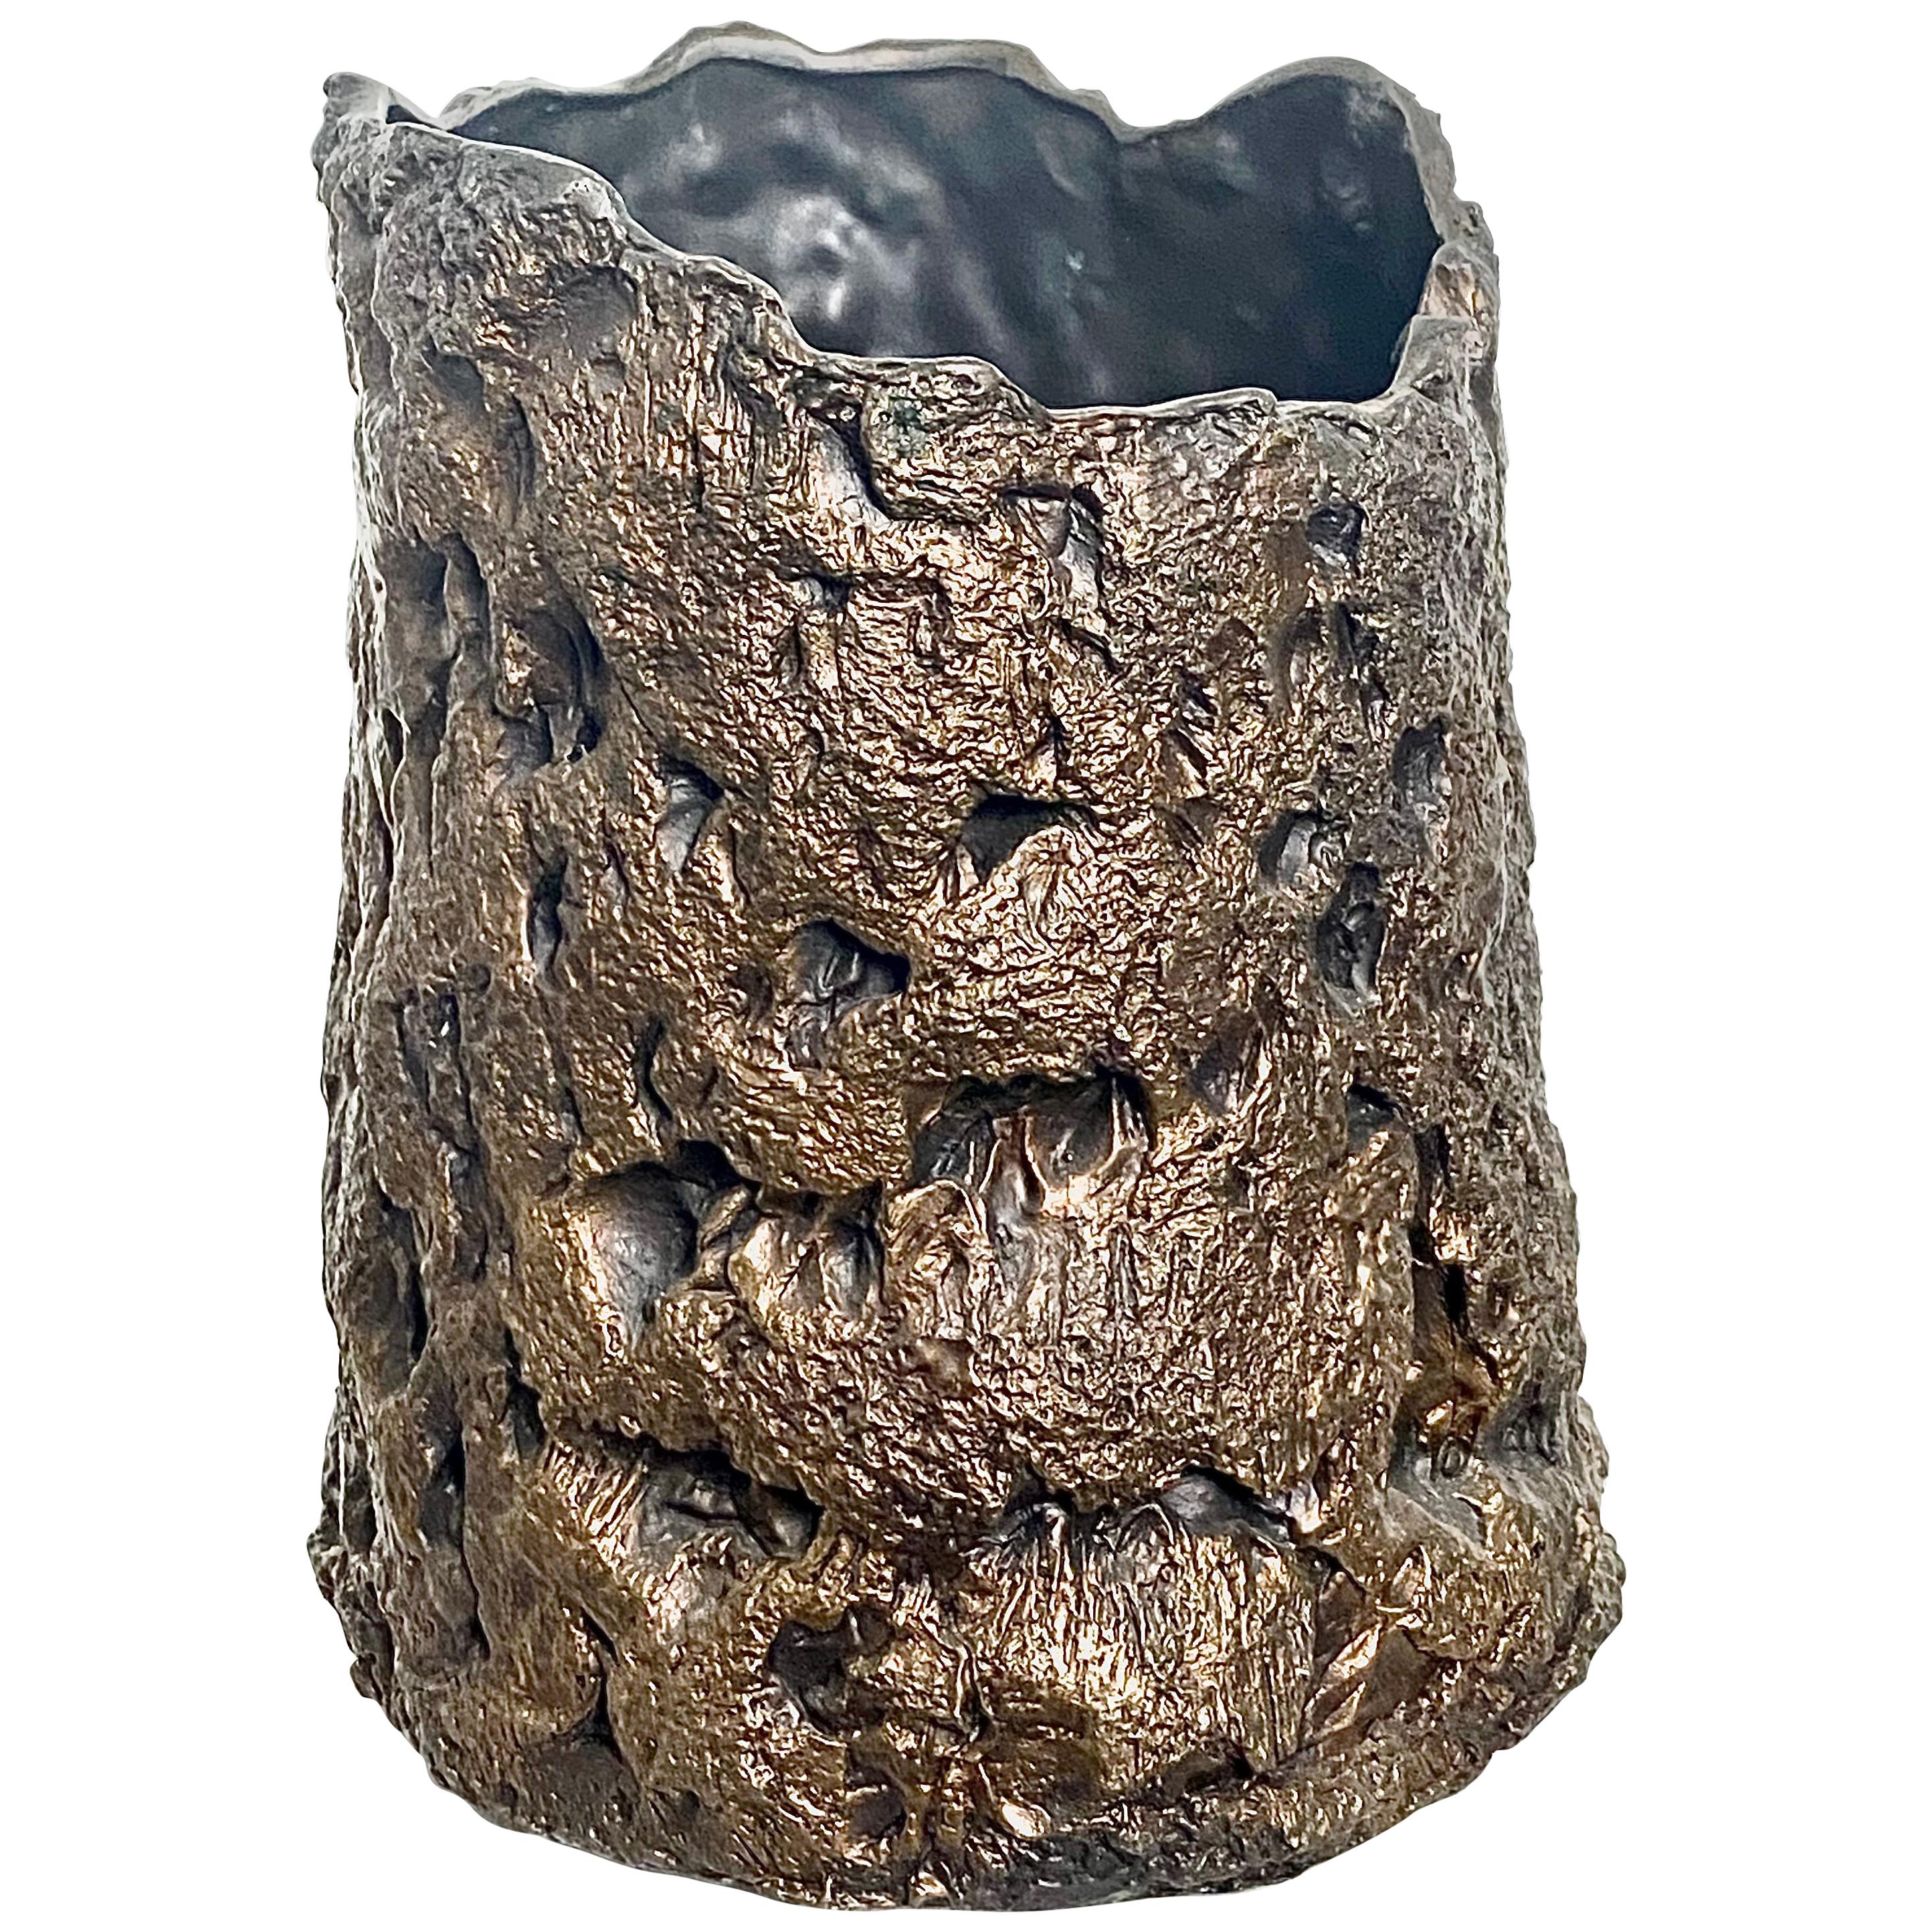  Sculptural Bronze Vase, 21st Century by Mattia Biagi For Sale